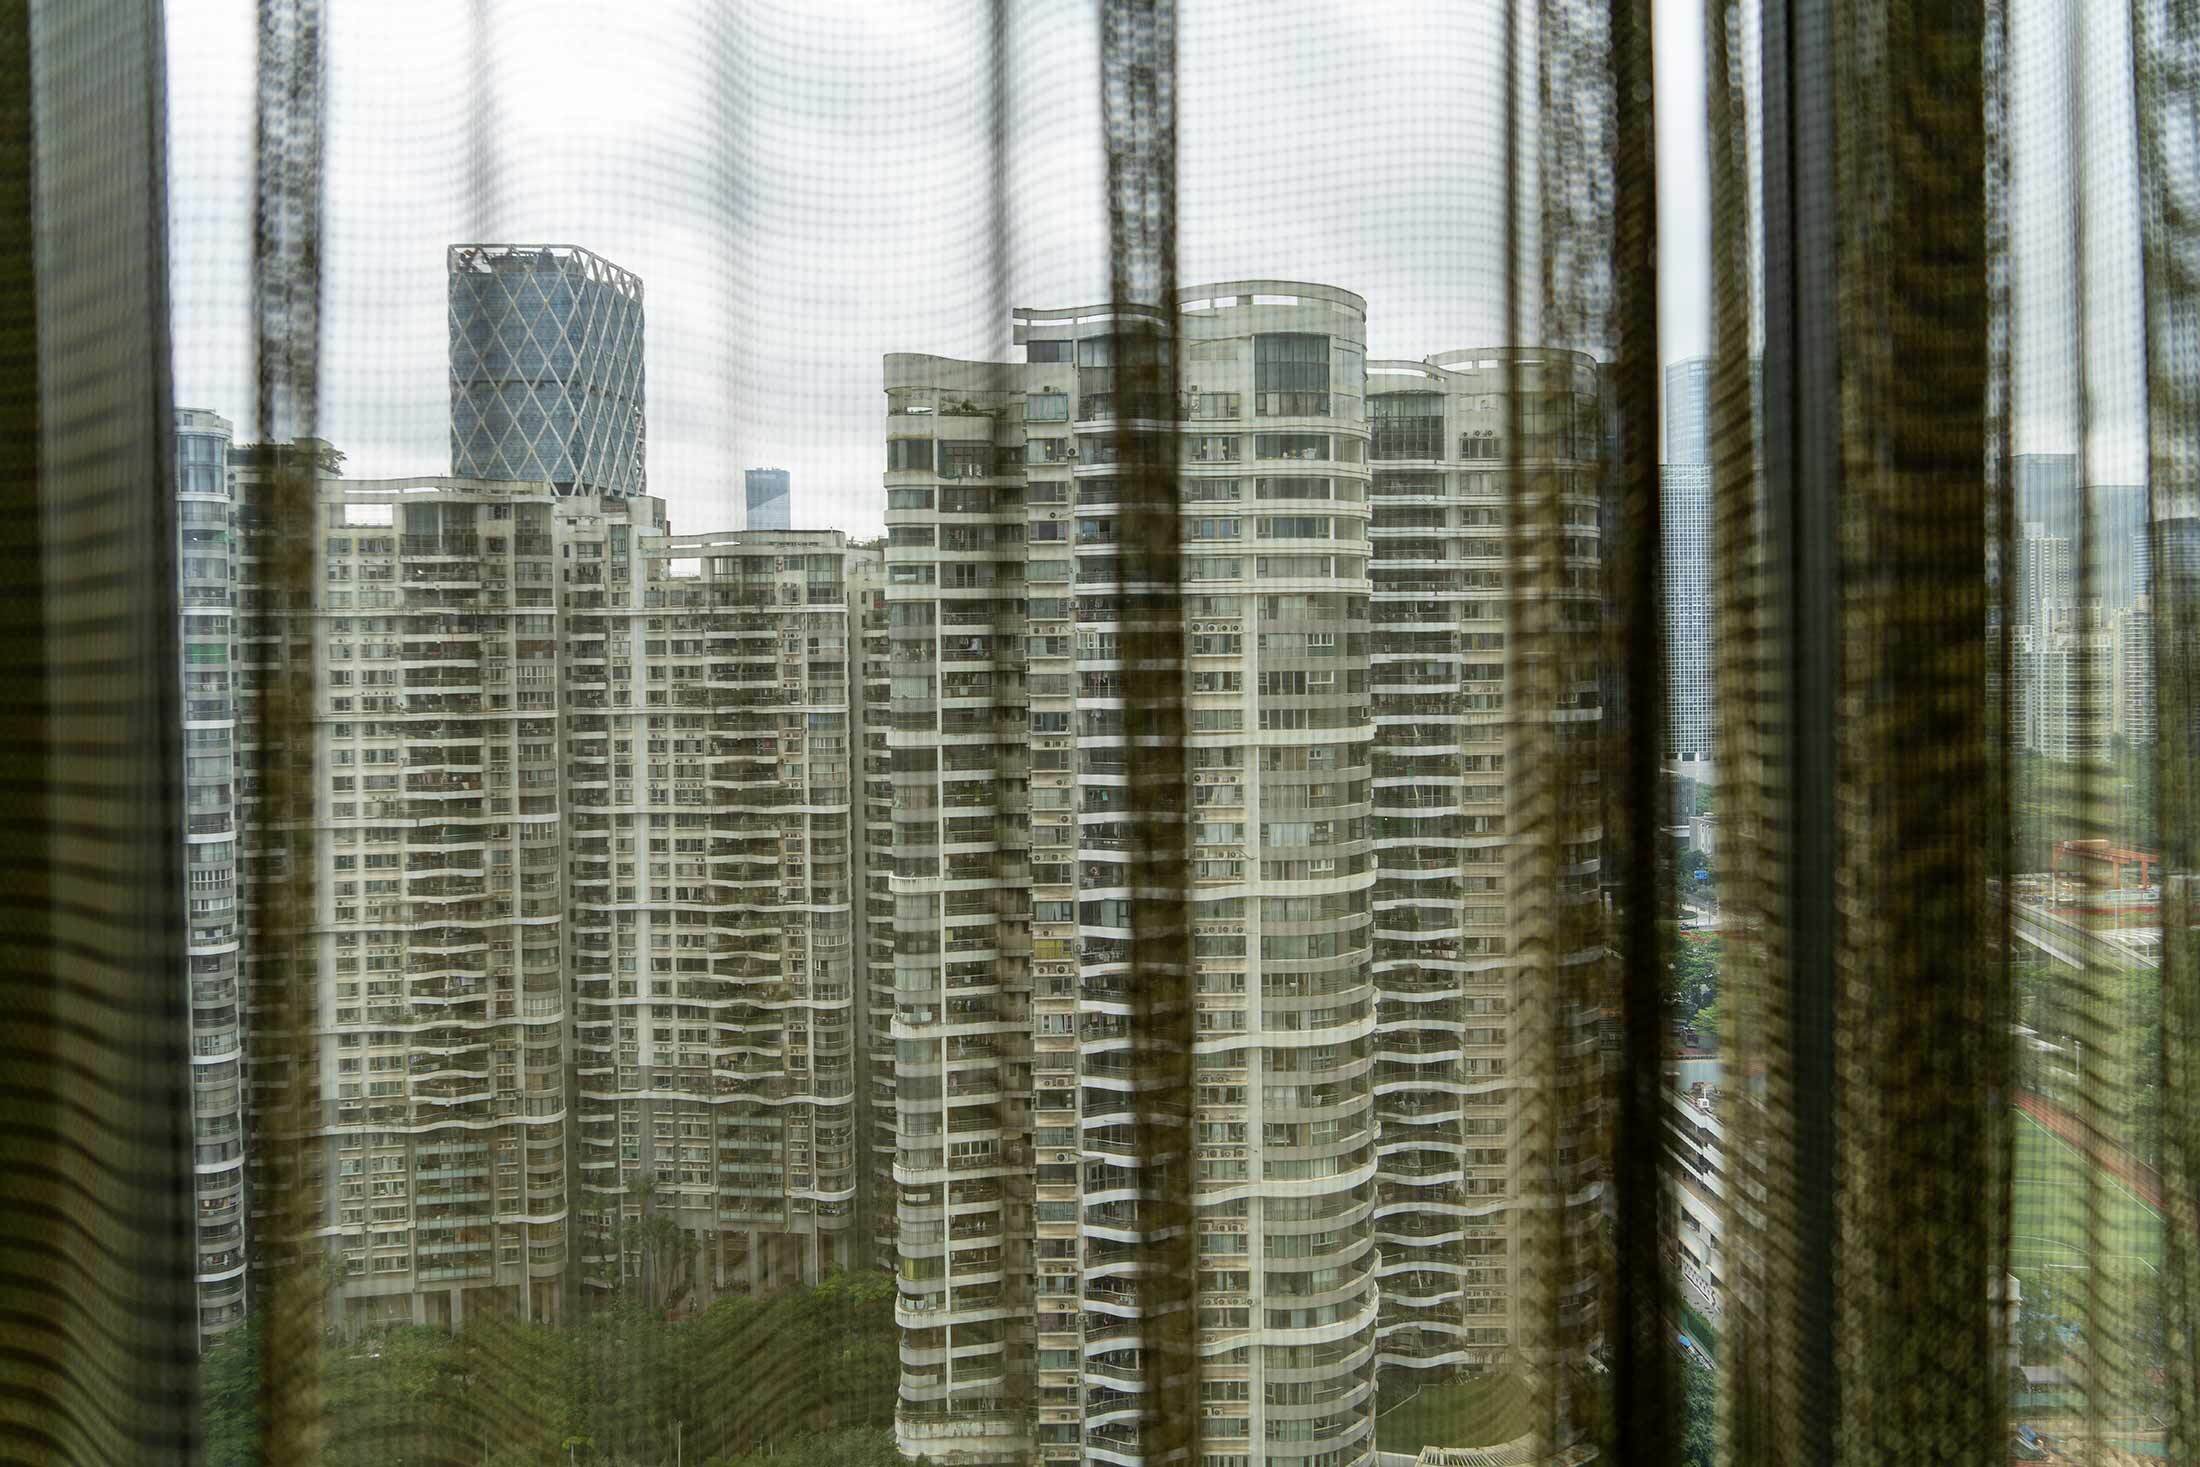 Residential buildings in the center Shenzhen’s technology hub.